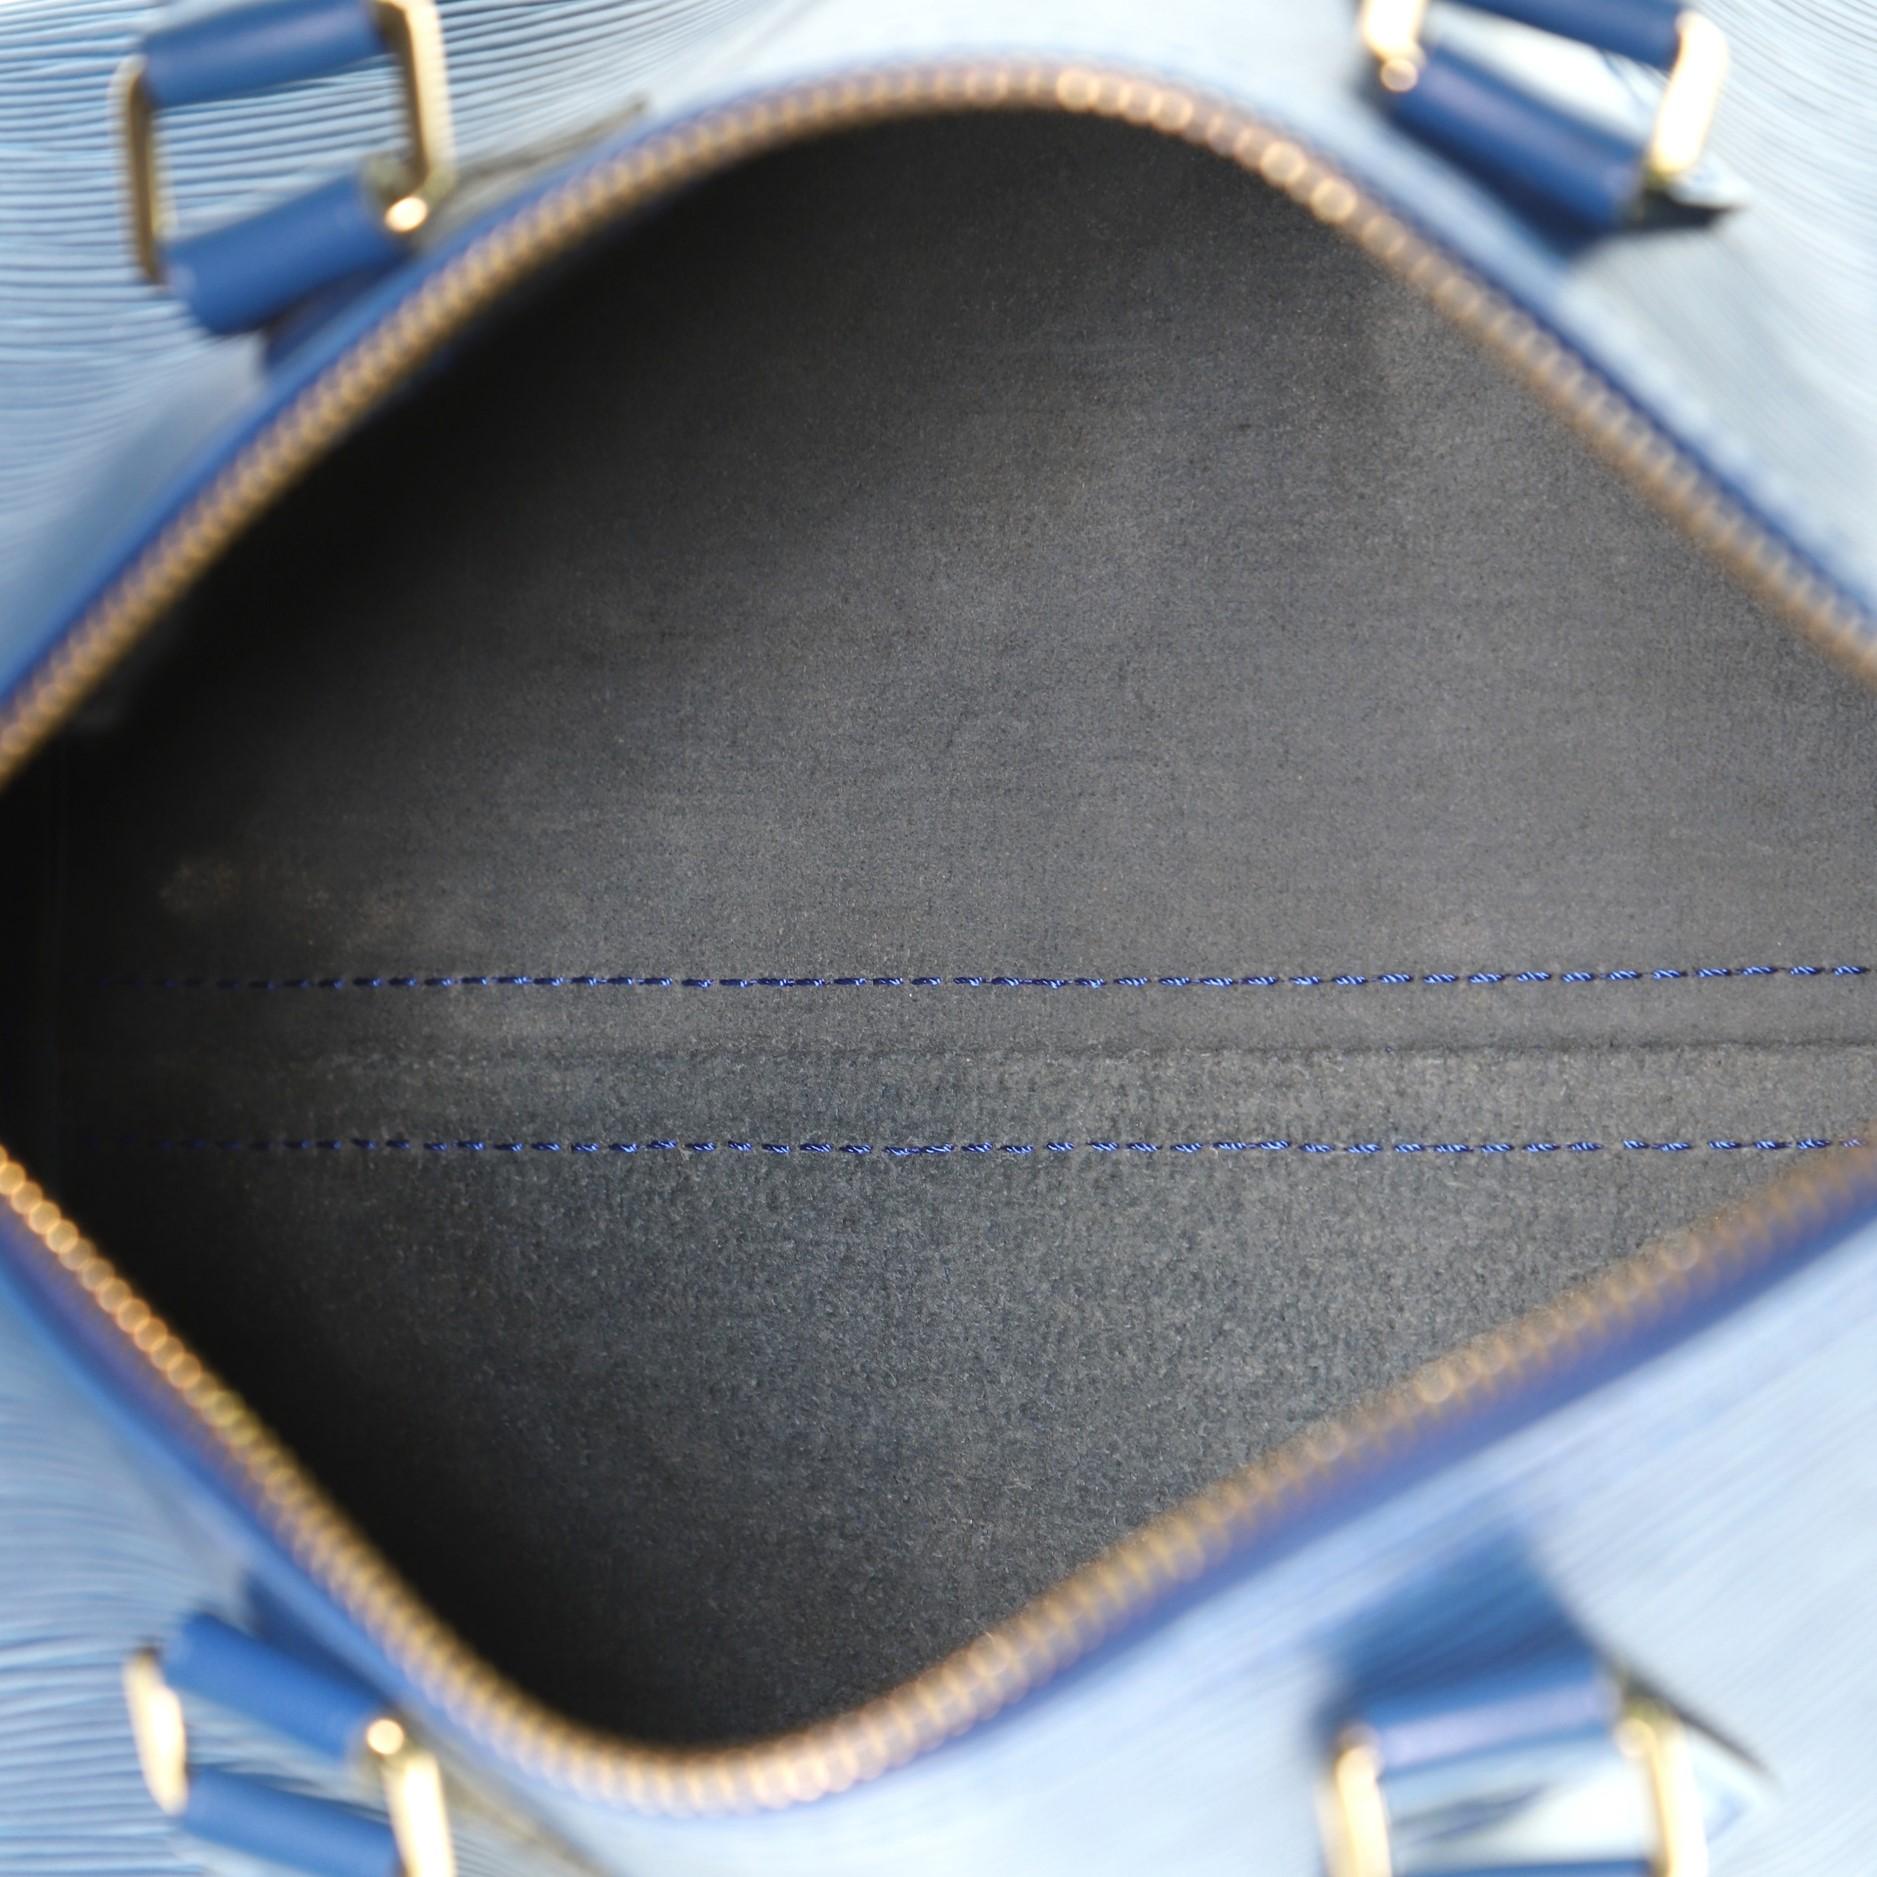 Women's or Men's Louis Vuitton Speedy Handbag Epi Leather 25